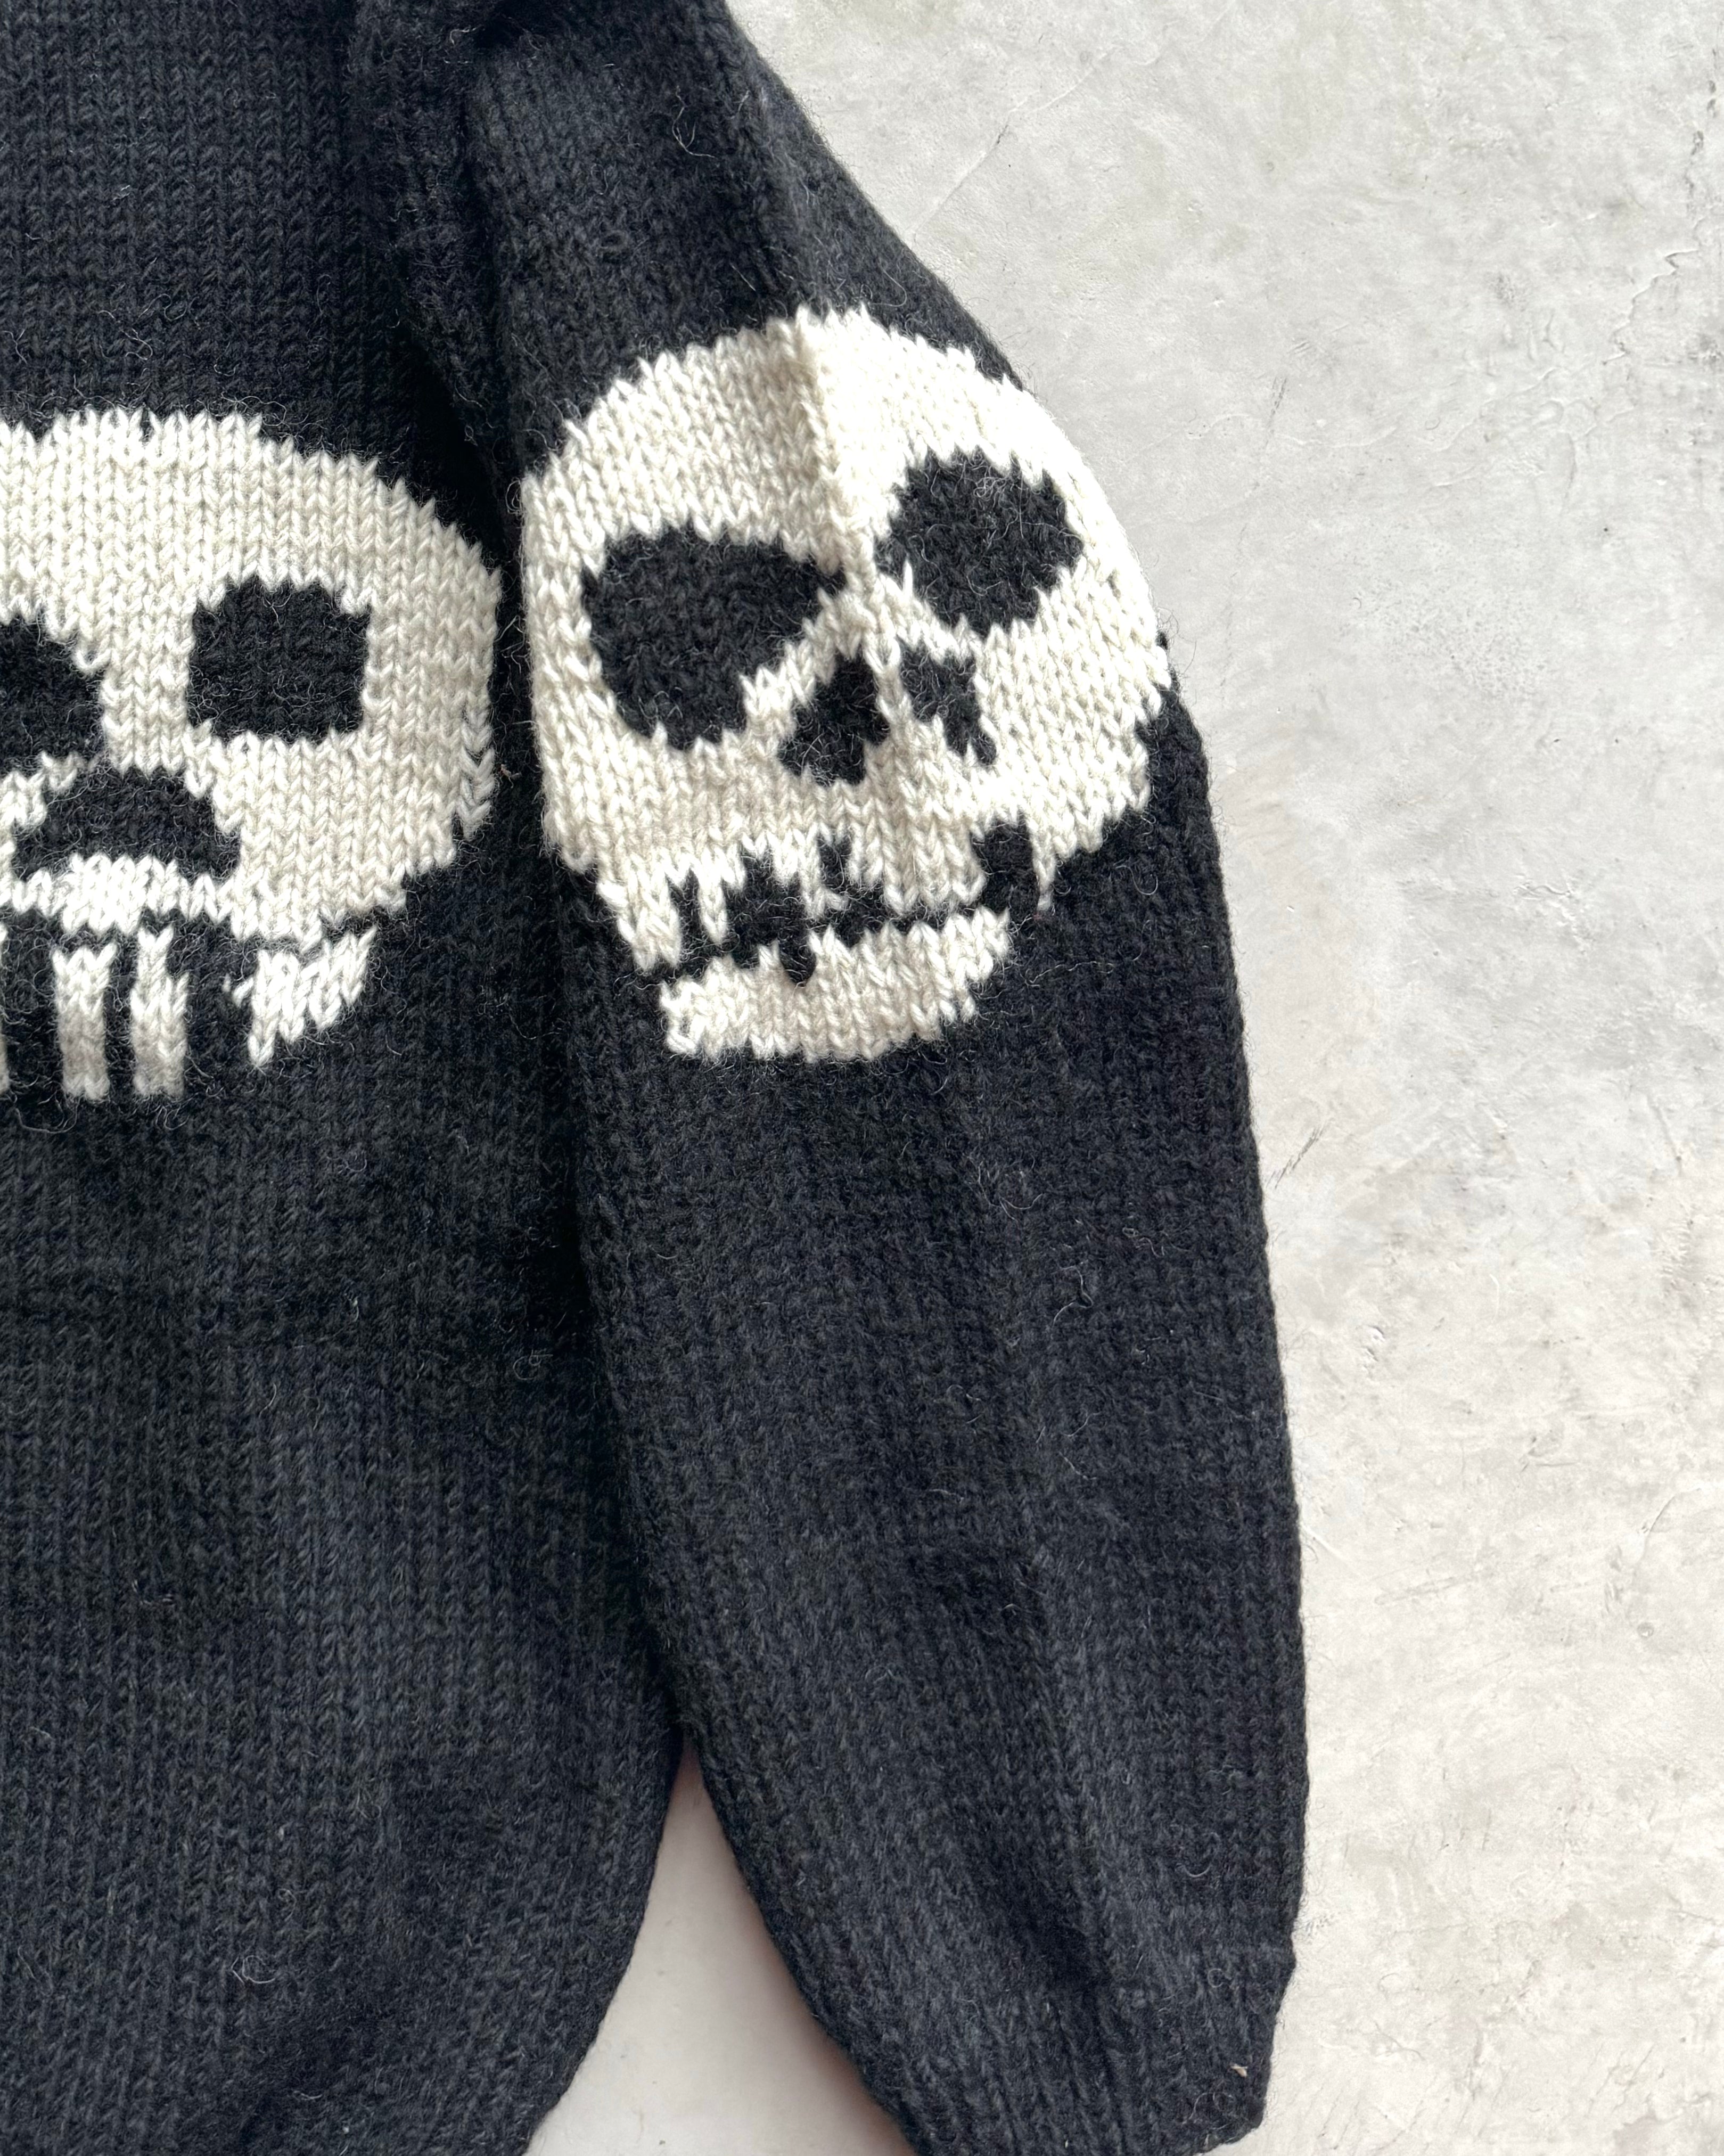 MacMahon Knitting Mills / Crew Neck Knit-Line Skulls - BLACK